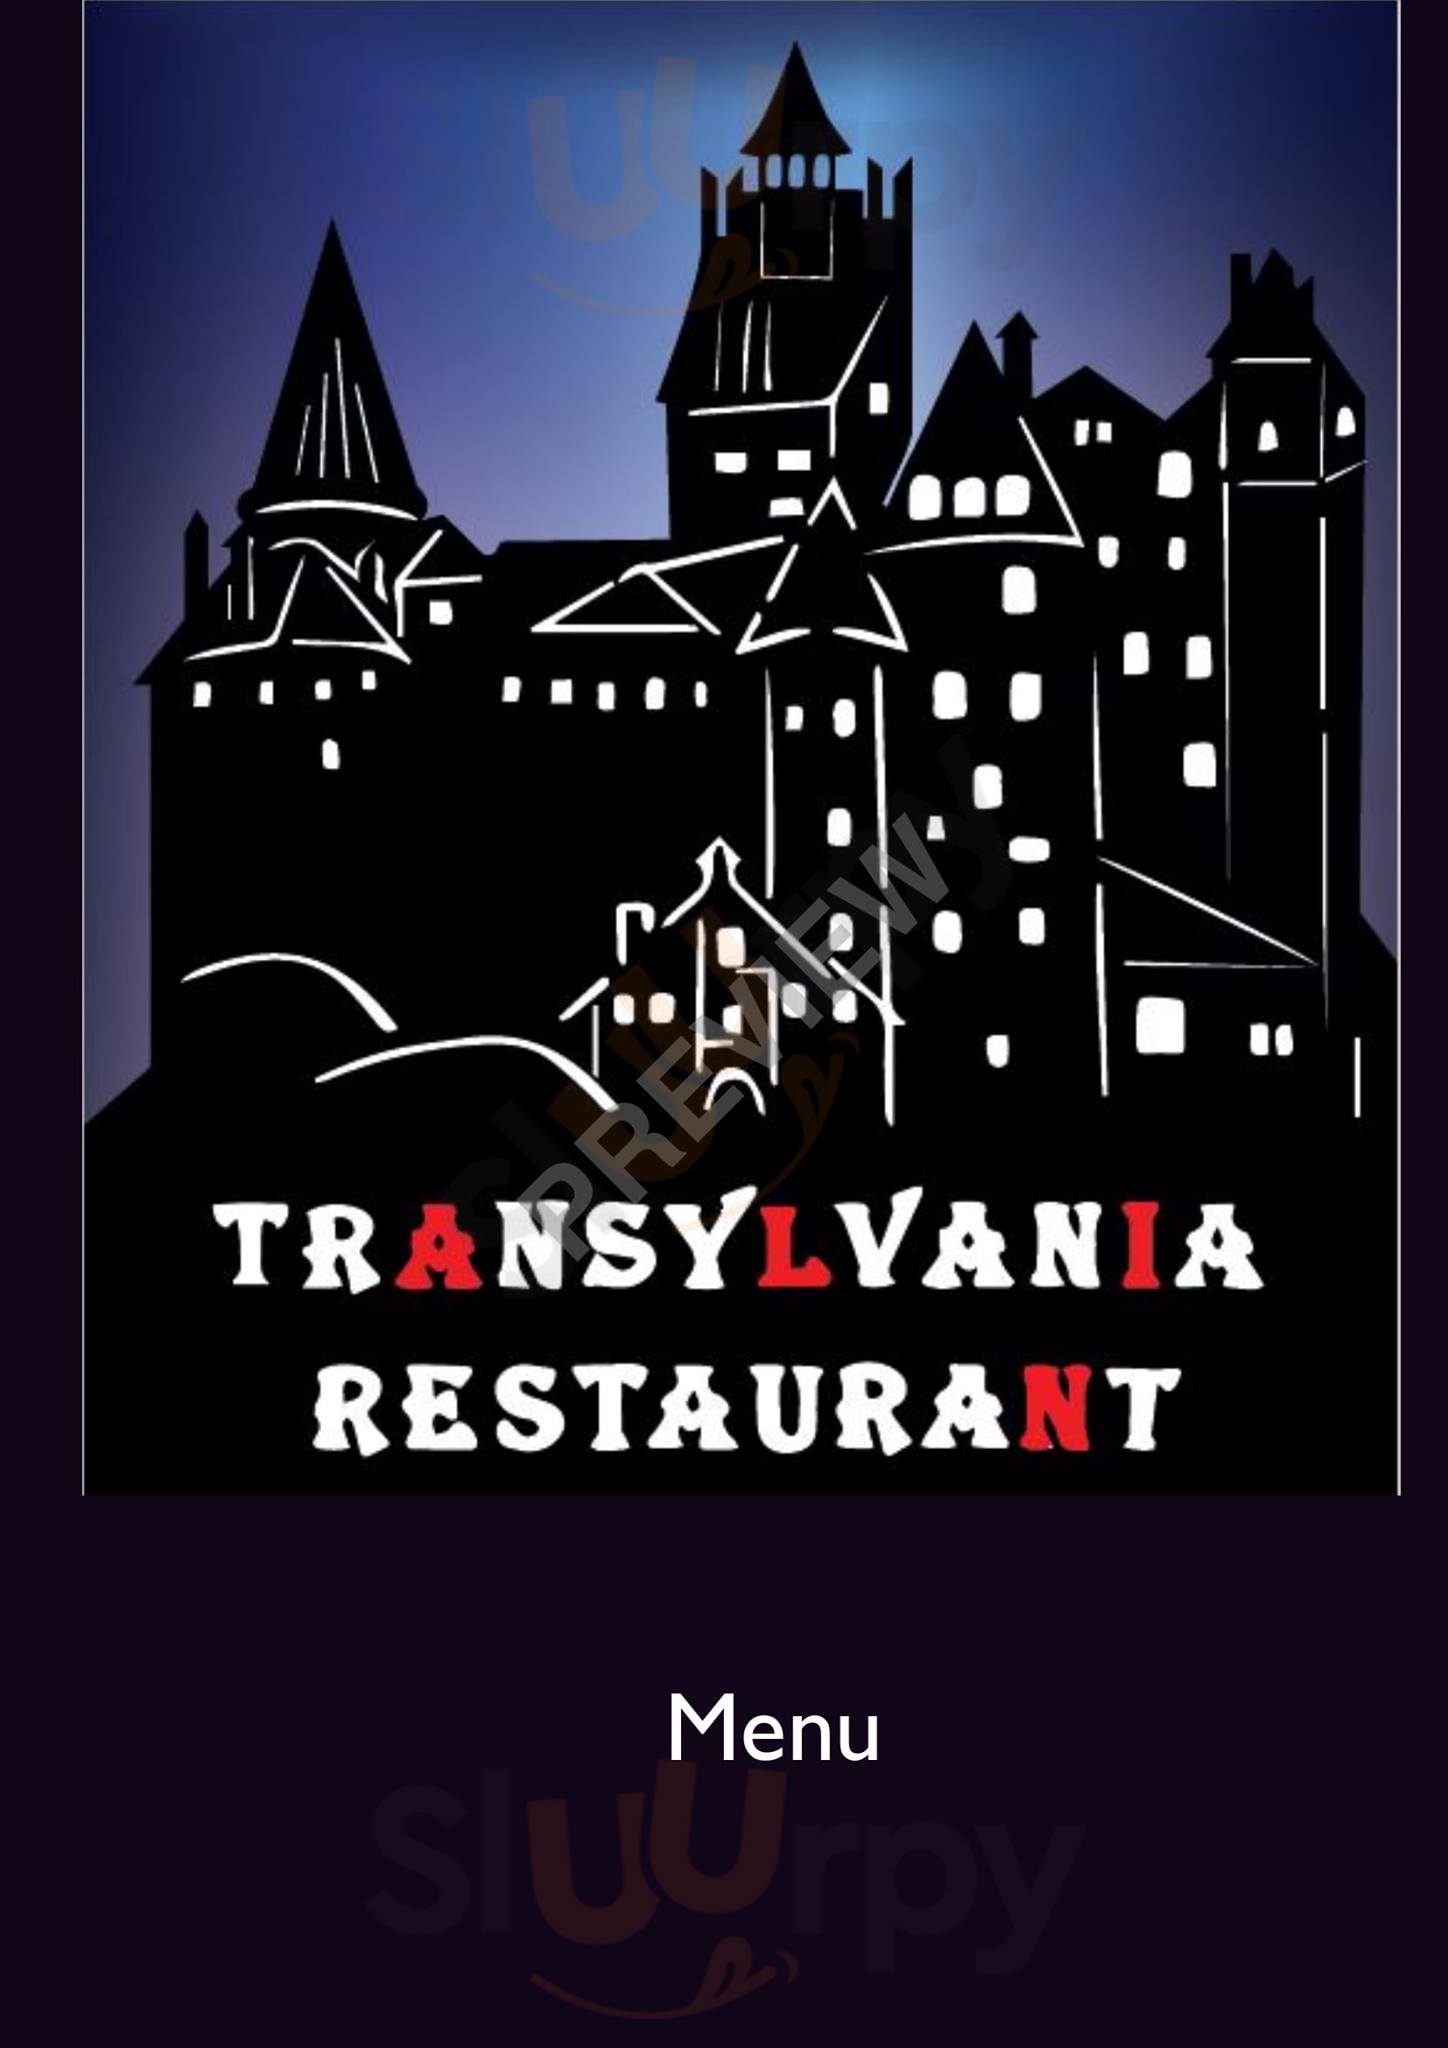 Transylvania Restaurant Bristol Menu - 1